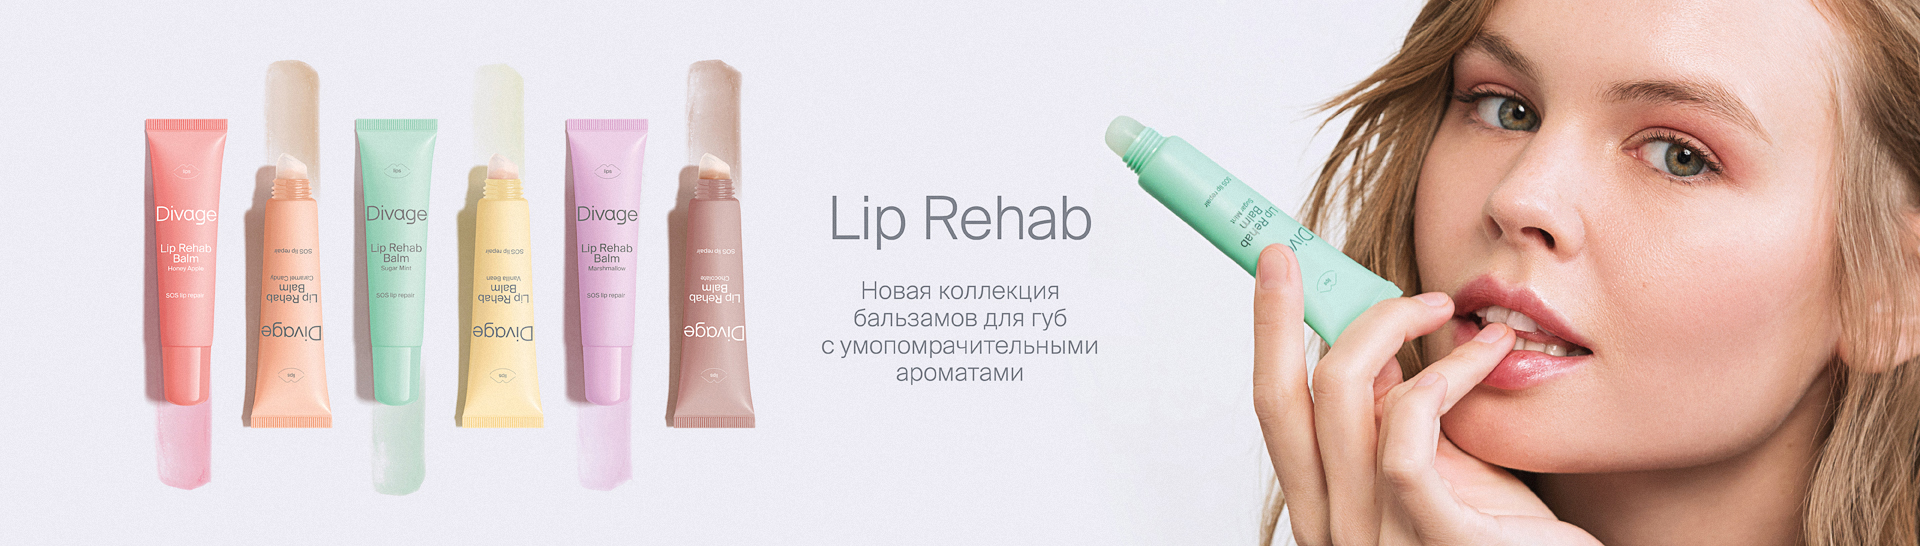 Lip rehab new